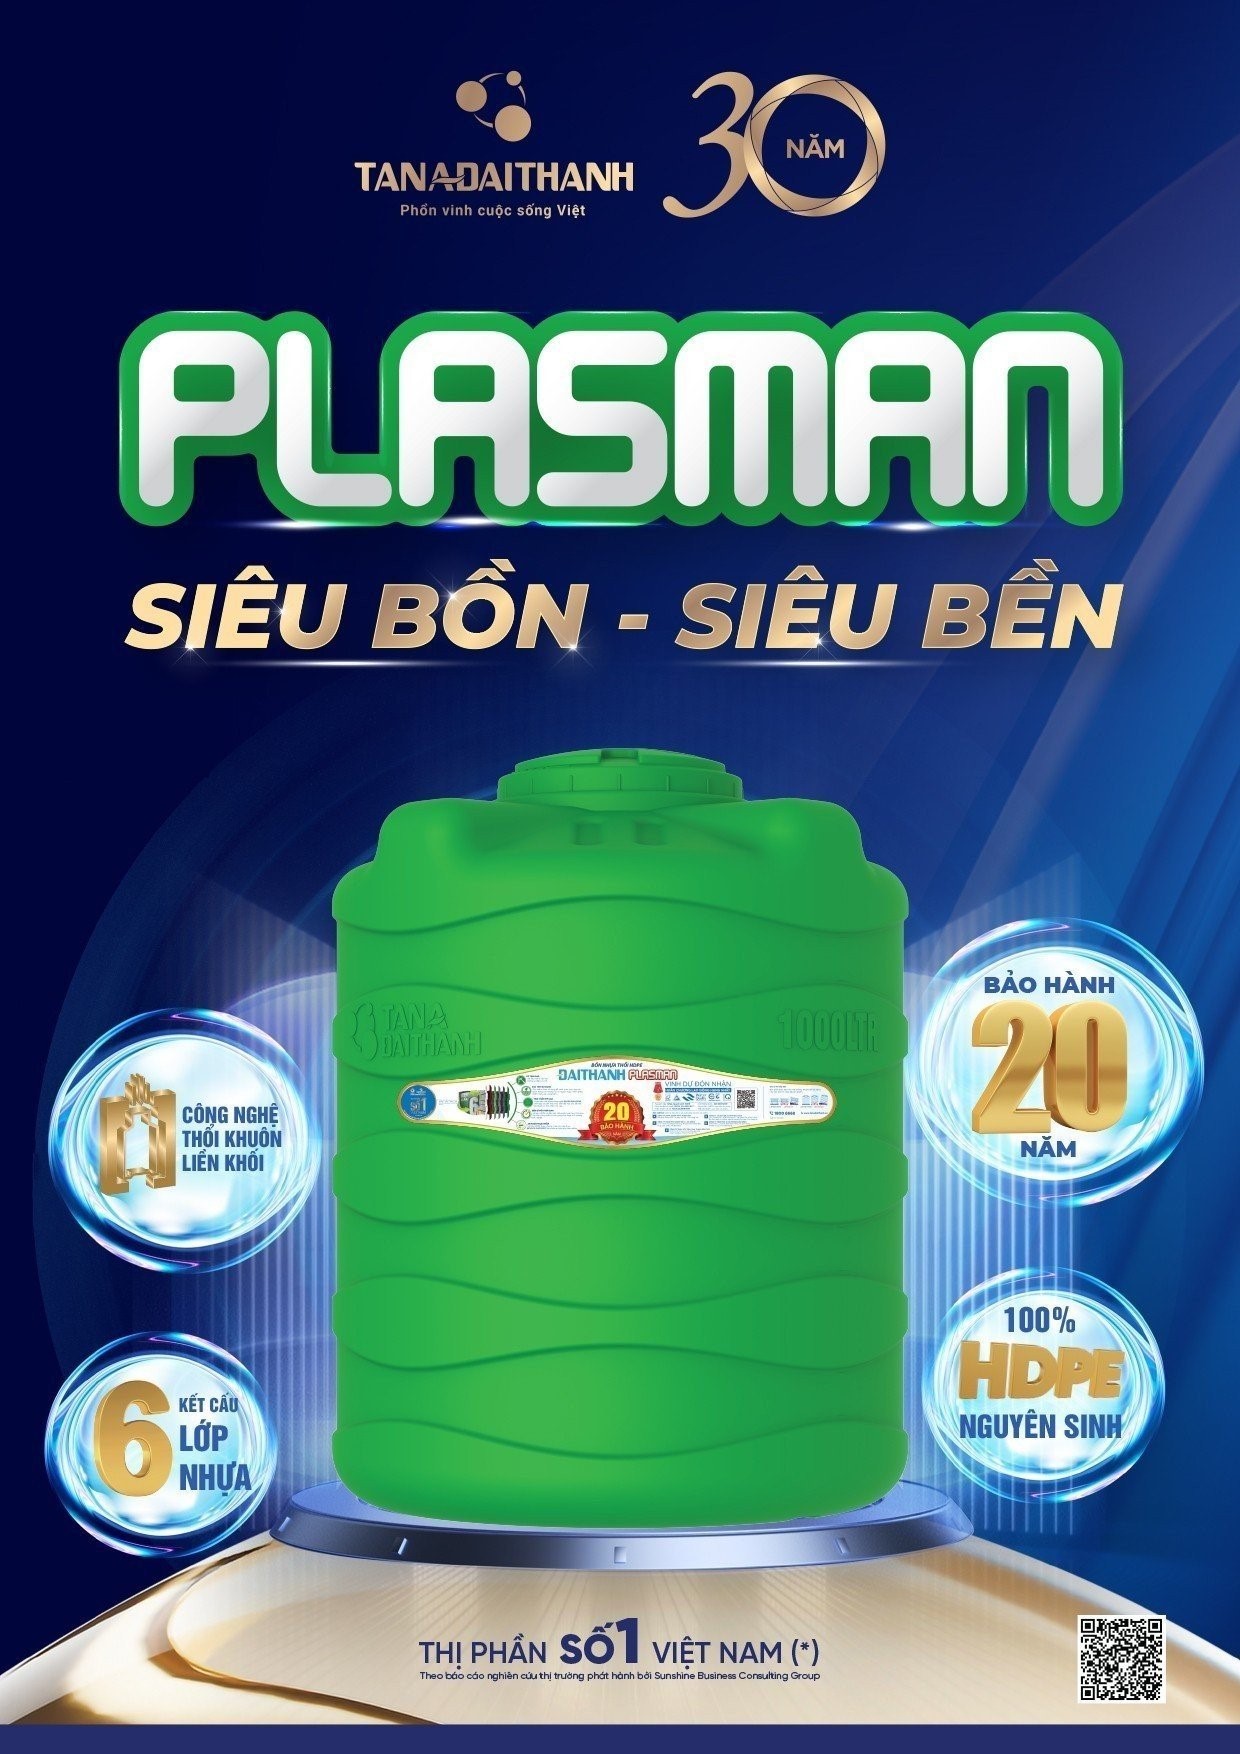 Tan A Dai Thanh Plasman super tank has many outstanding advantages.